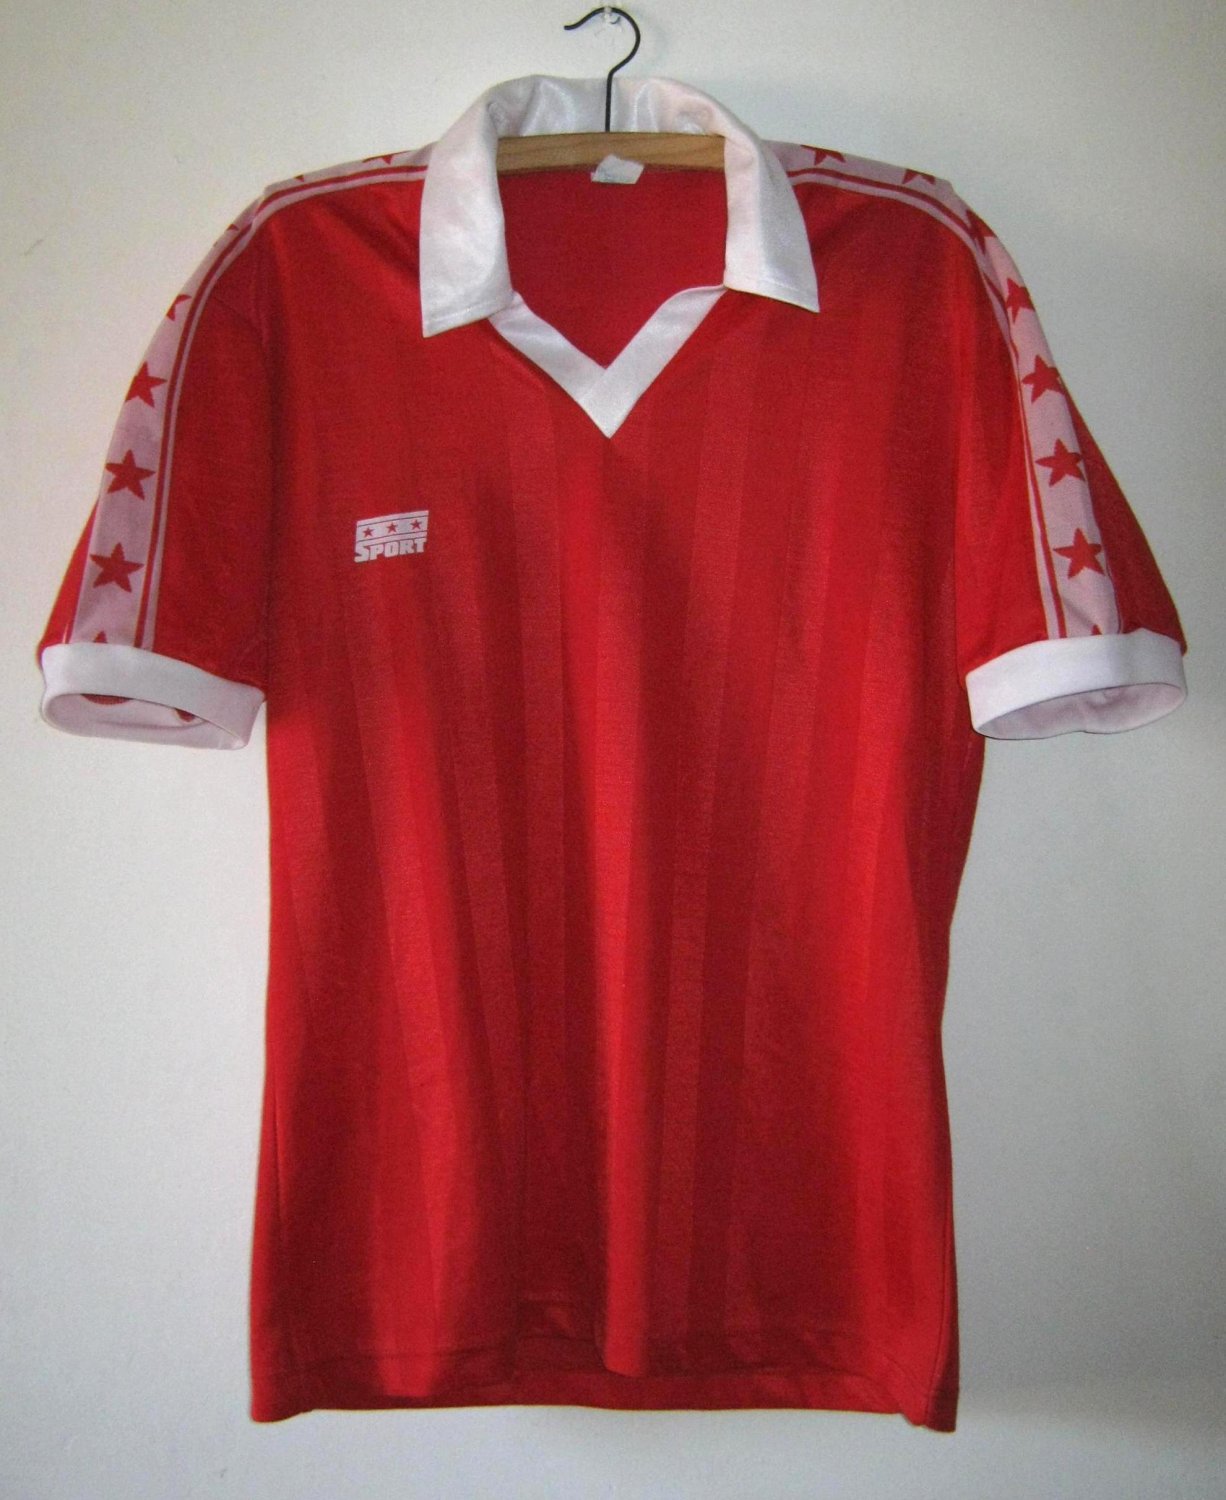 FK Sarajevo Home football shirt 1979 - 1980.